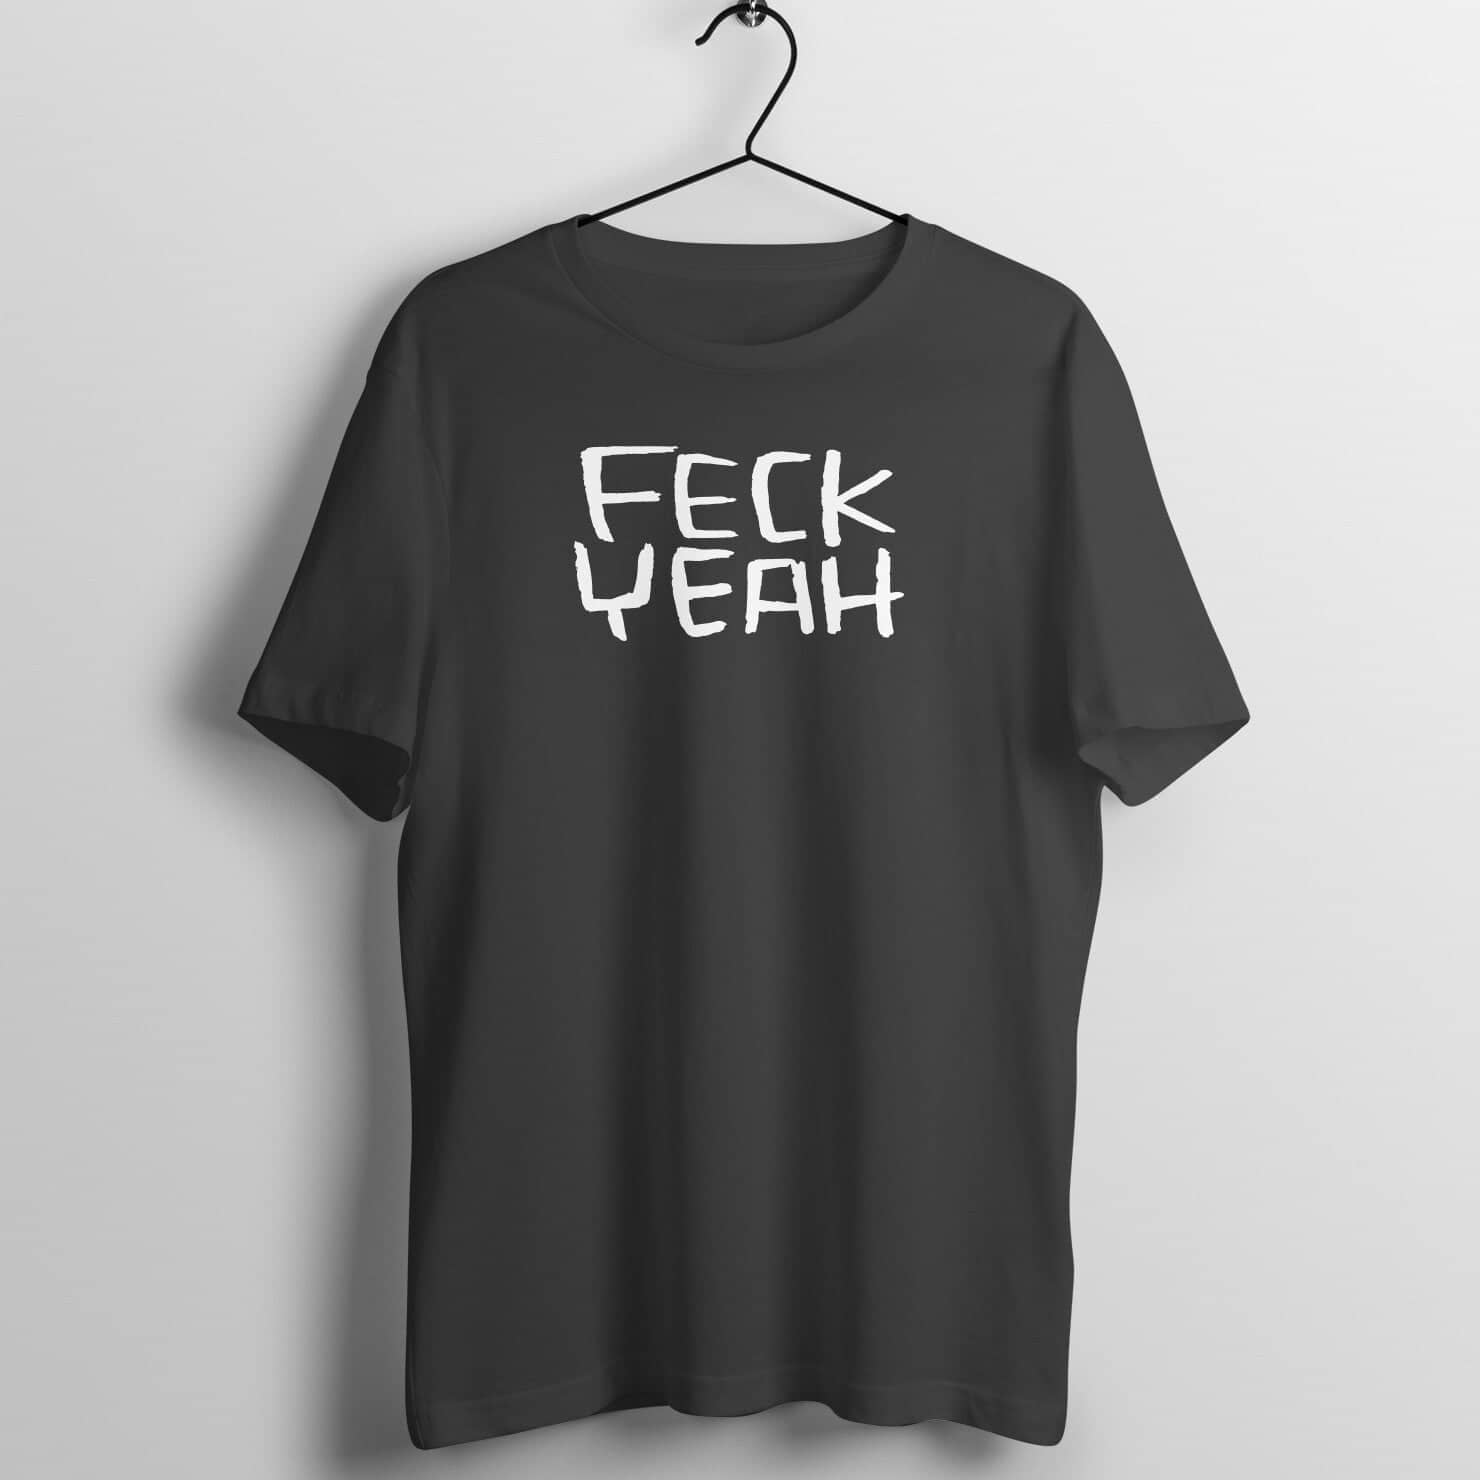 Feck Yeah Funny Modern Slang Black T Shirt for Men and Women Printrove Black S 